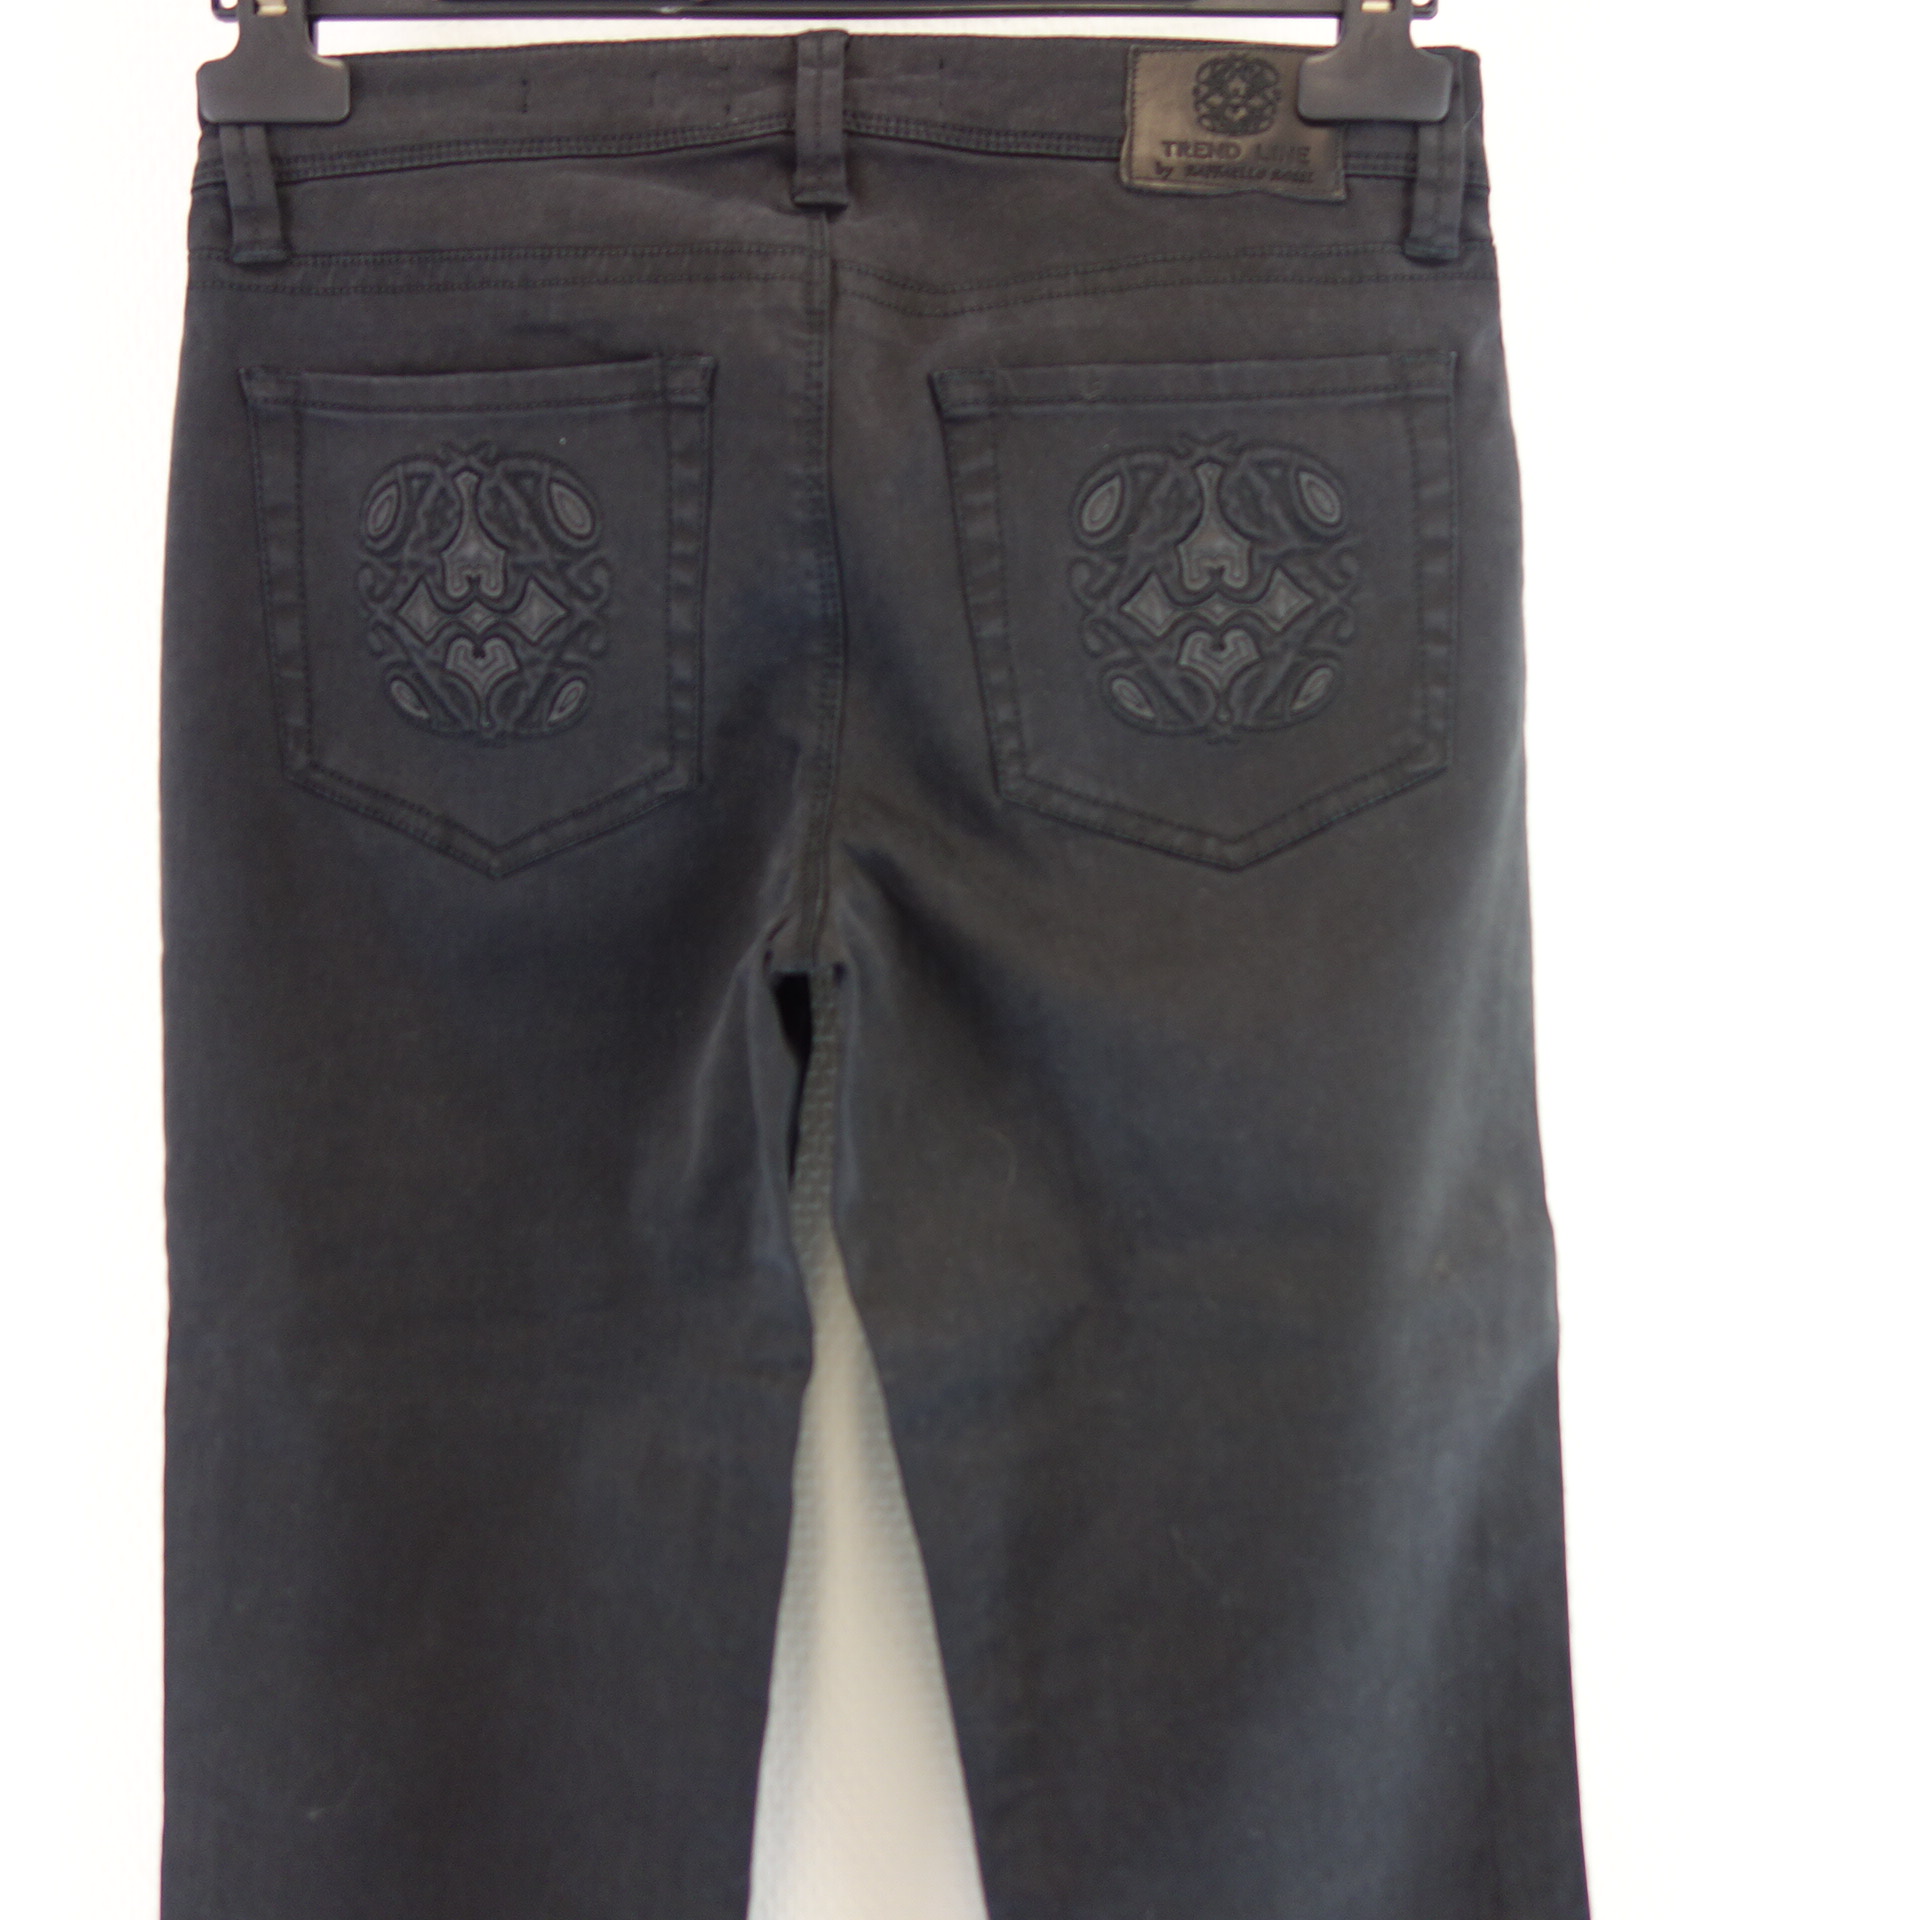 RAFFAELLO ROSSI TREND LINE Damen Jeans Hose Jeanshose Schwarz Gr 36 Modell Sinty Stick Slim Fit